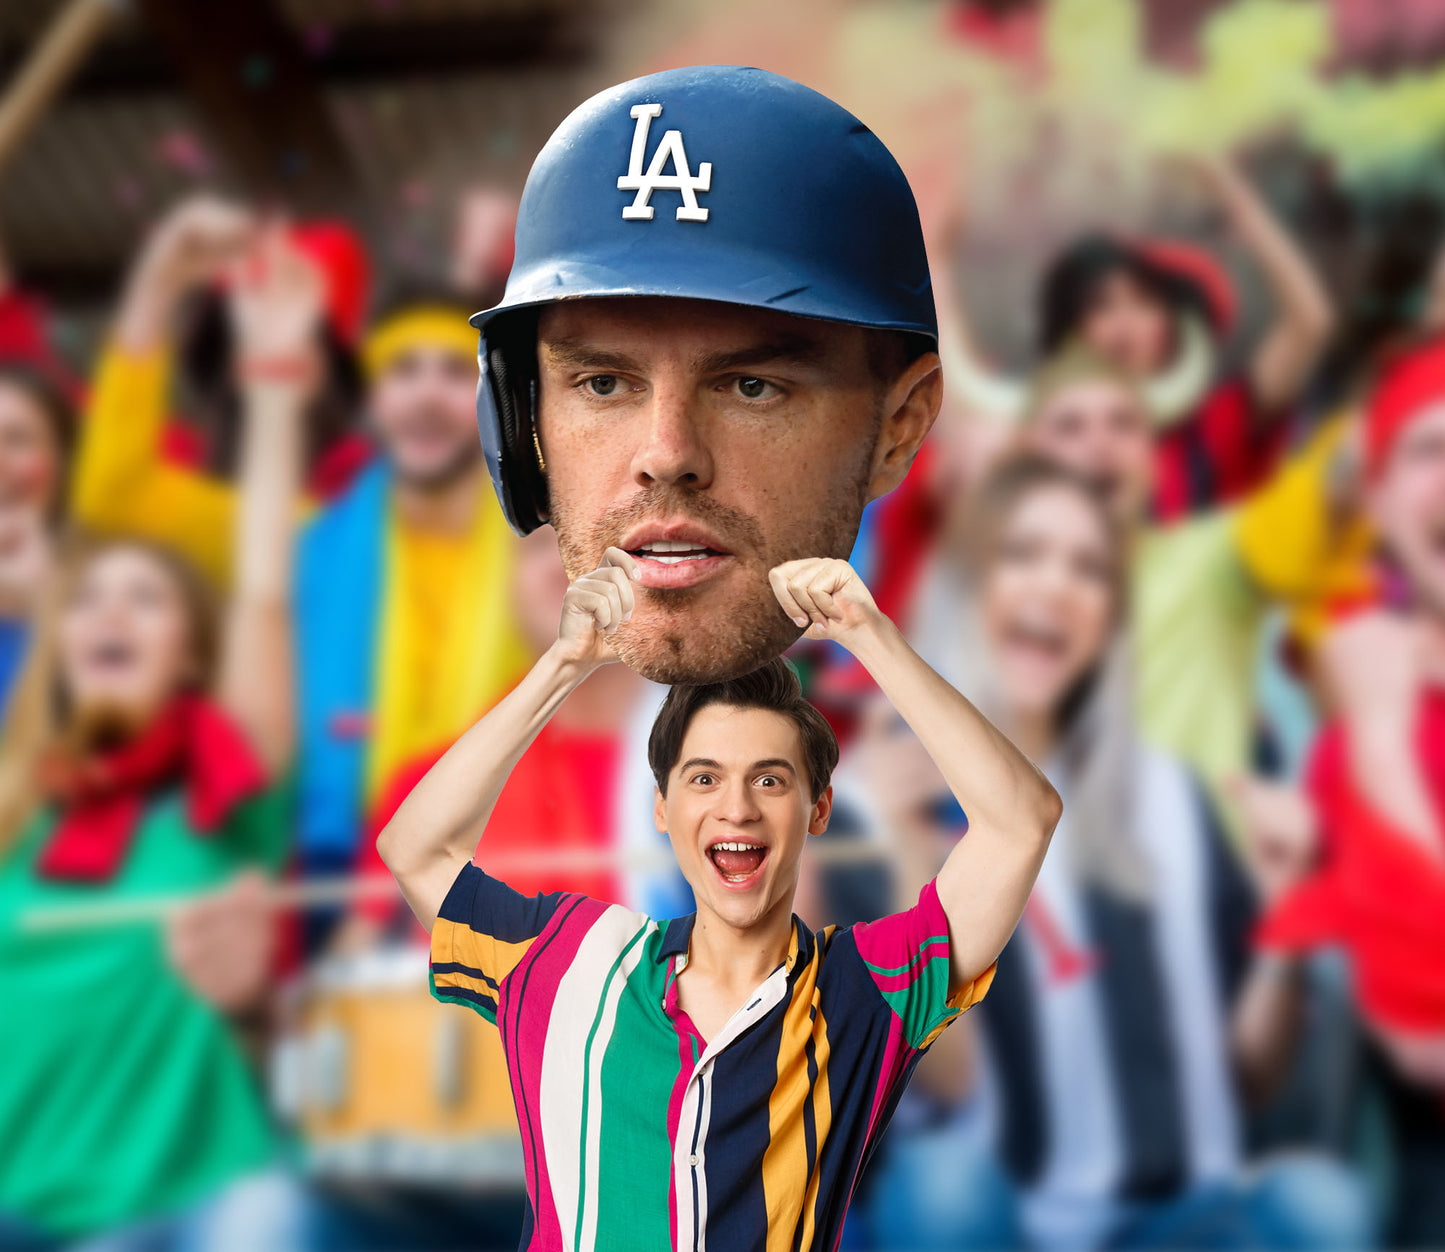 MLB Los Angeles Dodgers (Freddie Freeman) Men's Replica Baseball